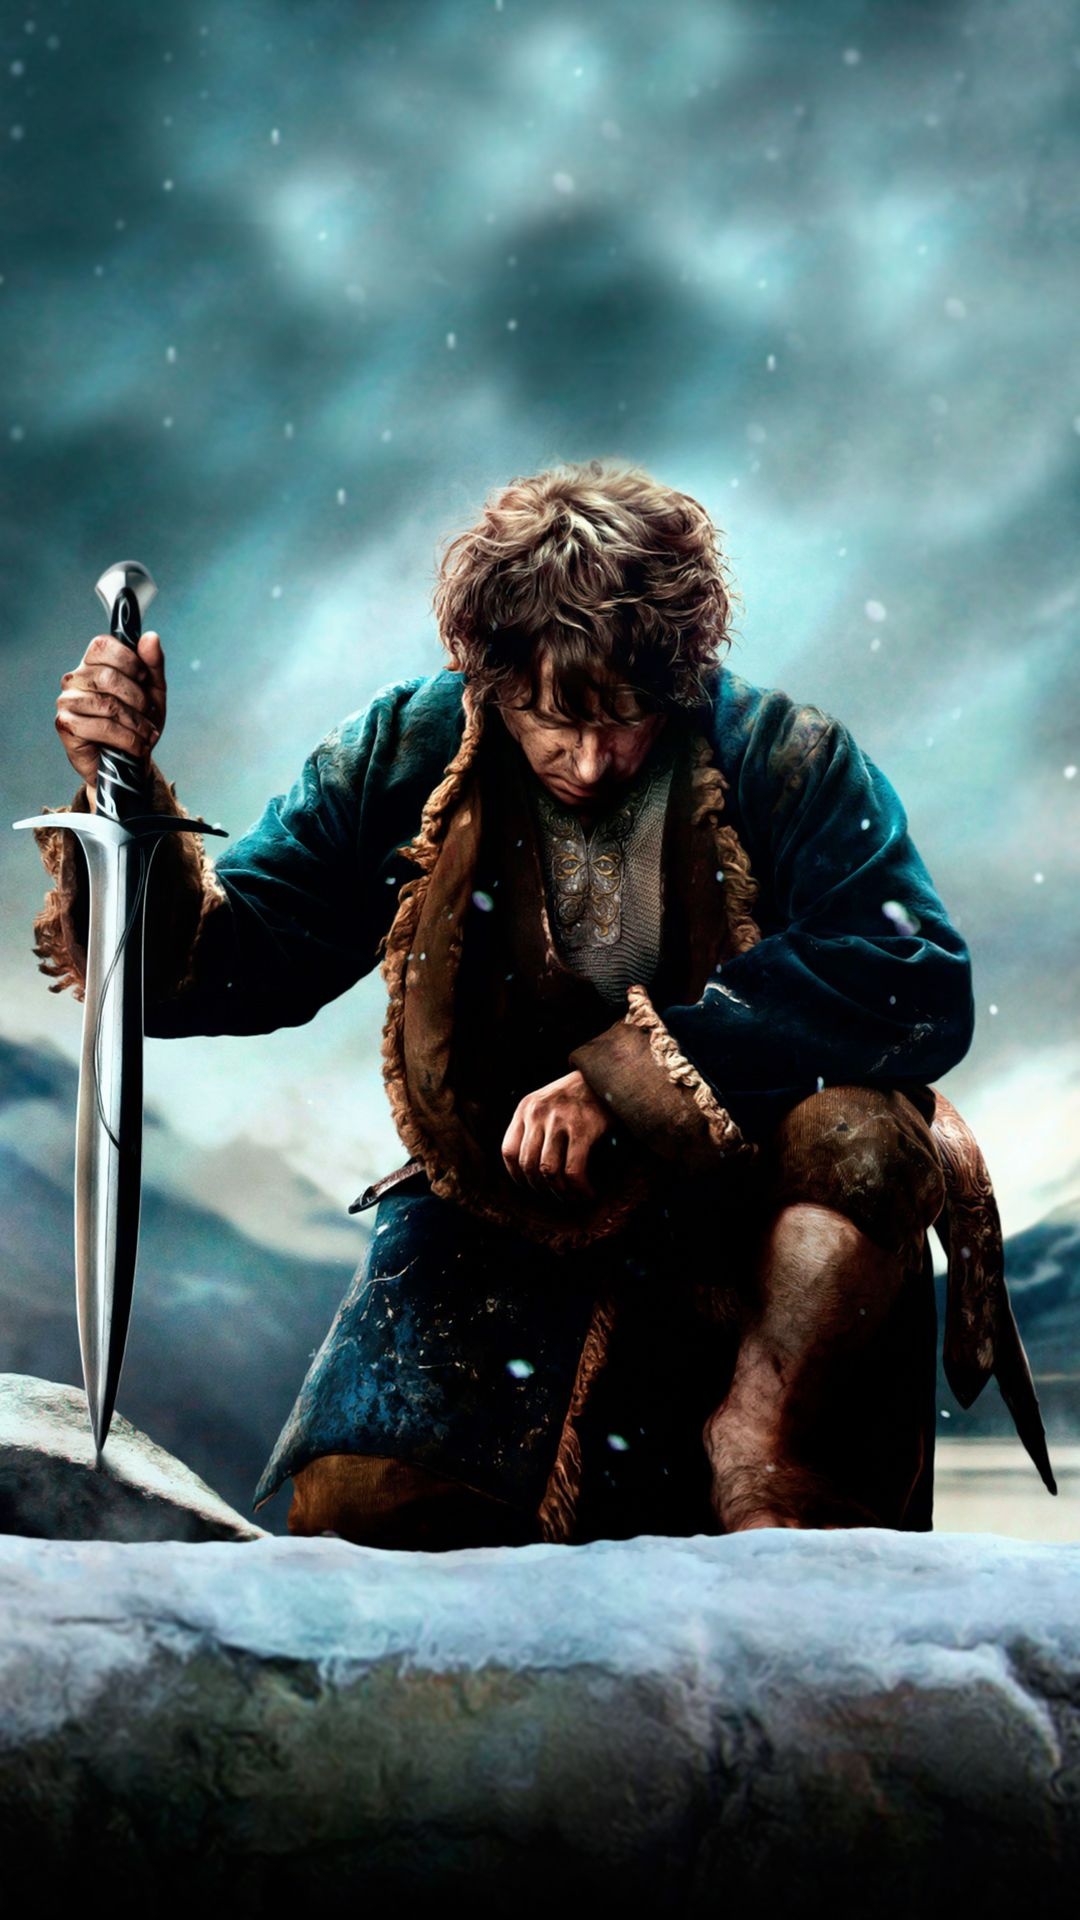 The Hobbit (Movie): Bilbo Baggins, Fictional character of J.R.R. Tolkien's novel. 1080x1920 Full HD Background.